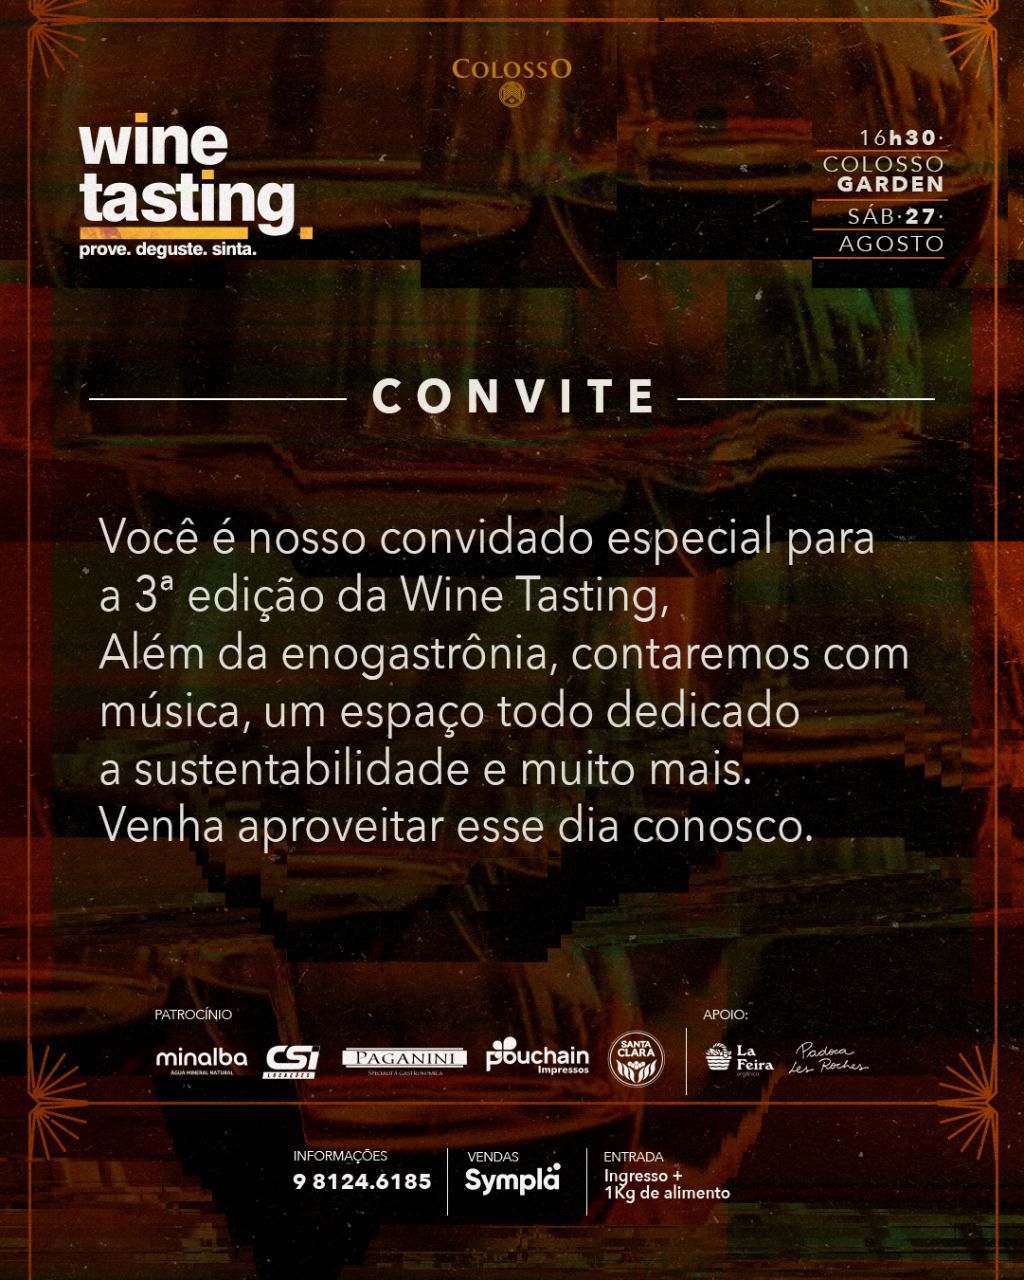 Colosso realiza 3ª Edição da Wine Tasting